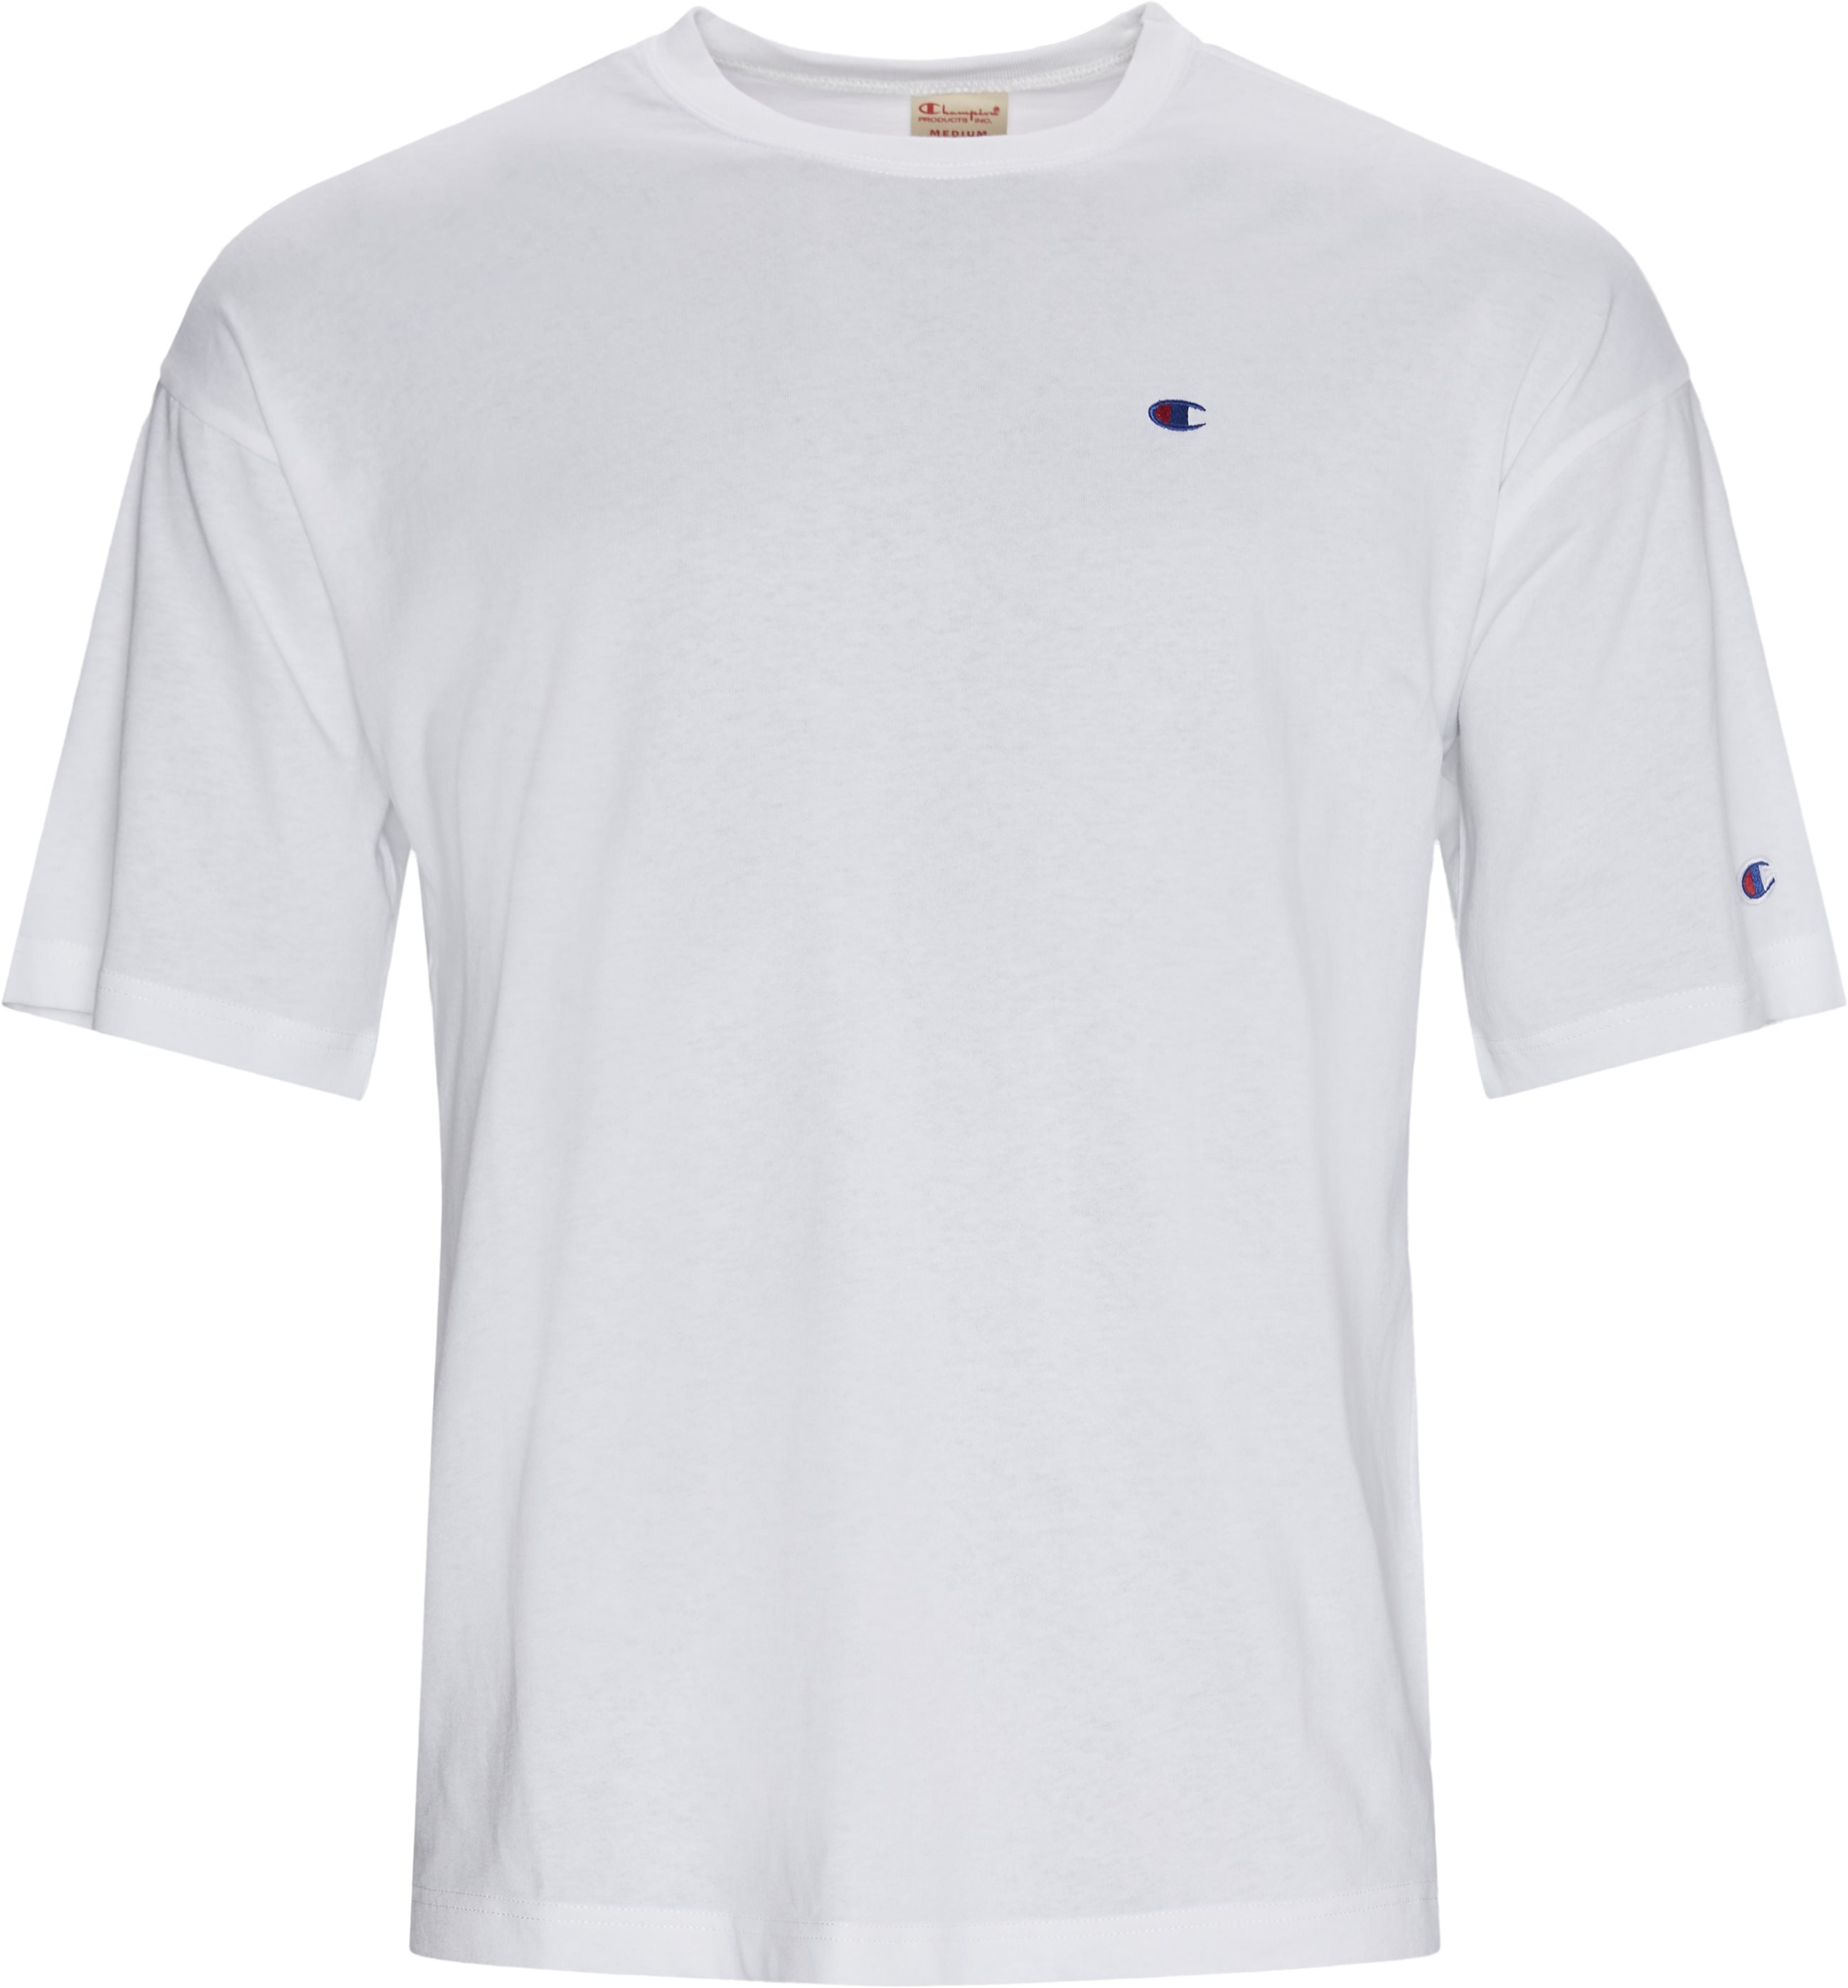 SHAPE Tee - T-shirts - Regular fit - White